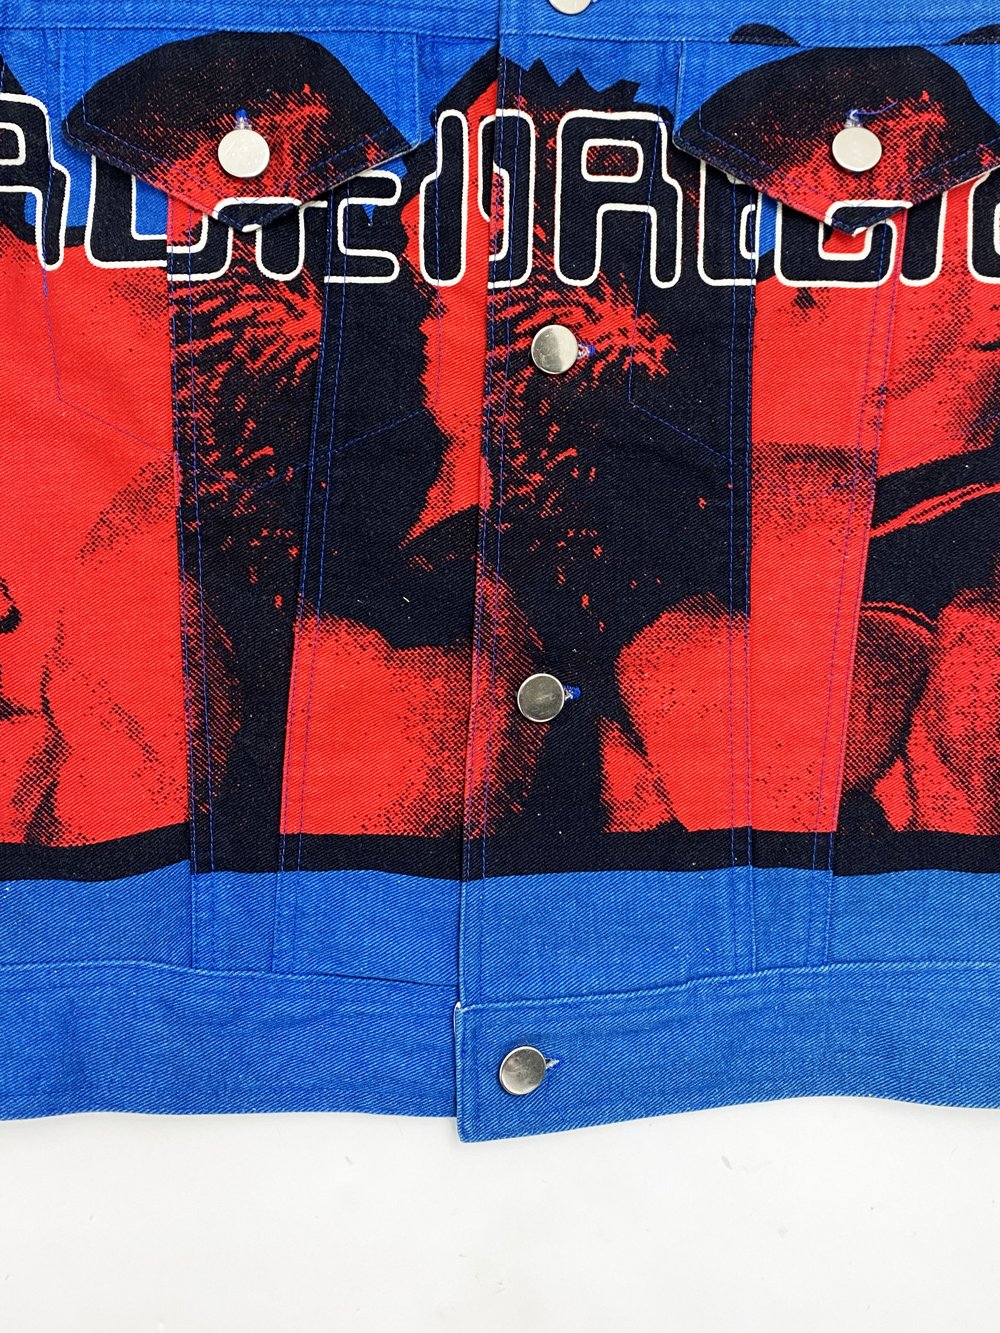 Stephen Sprouse 1988 hardcore print jean jacket — JAMES VELORIA